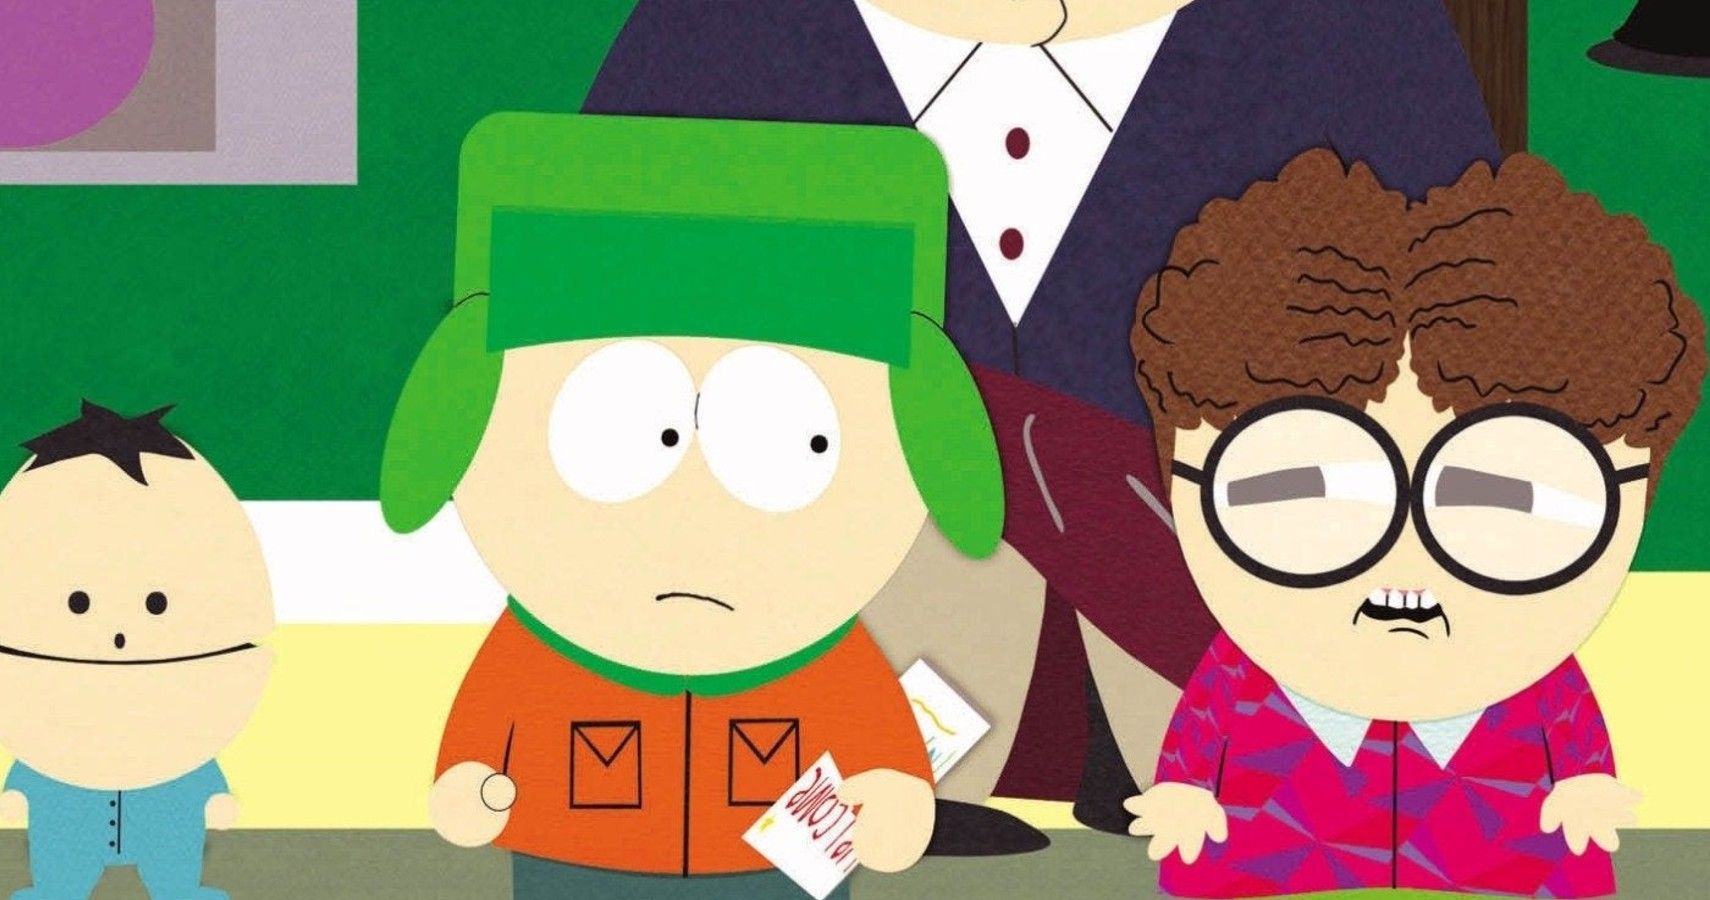 South Park 10 Best Episodes For Fans of Kyle